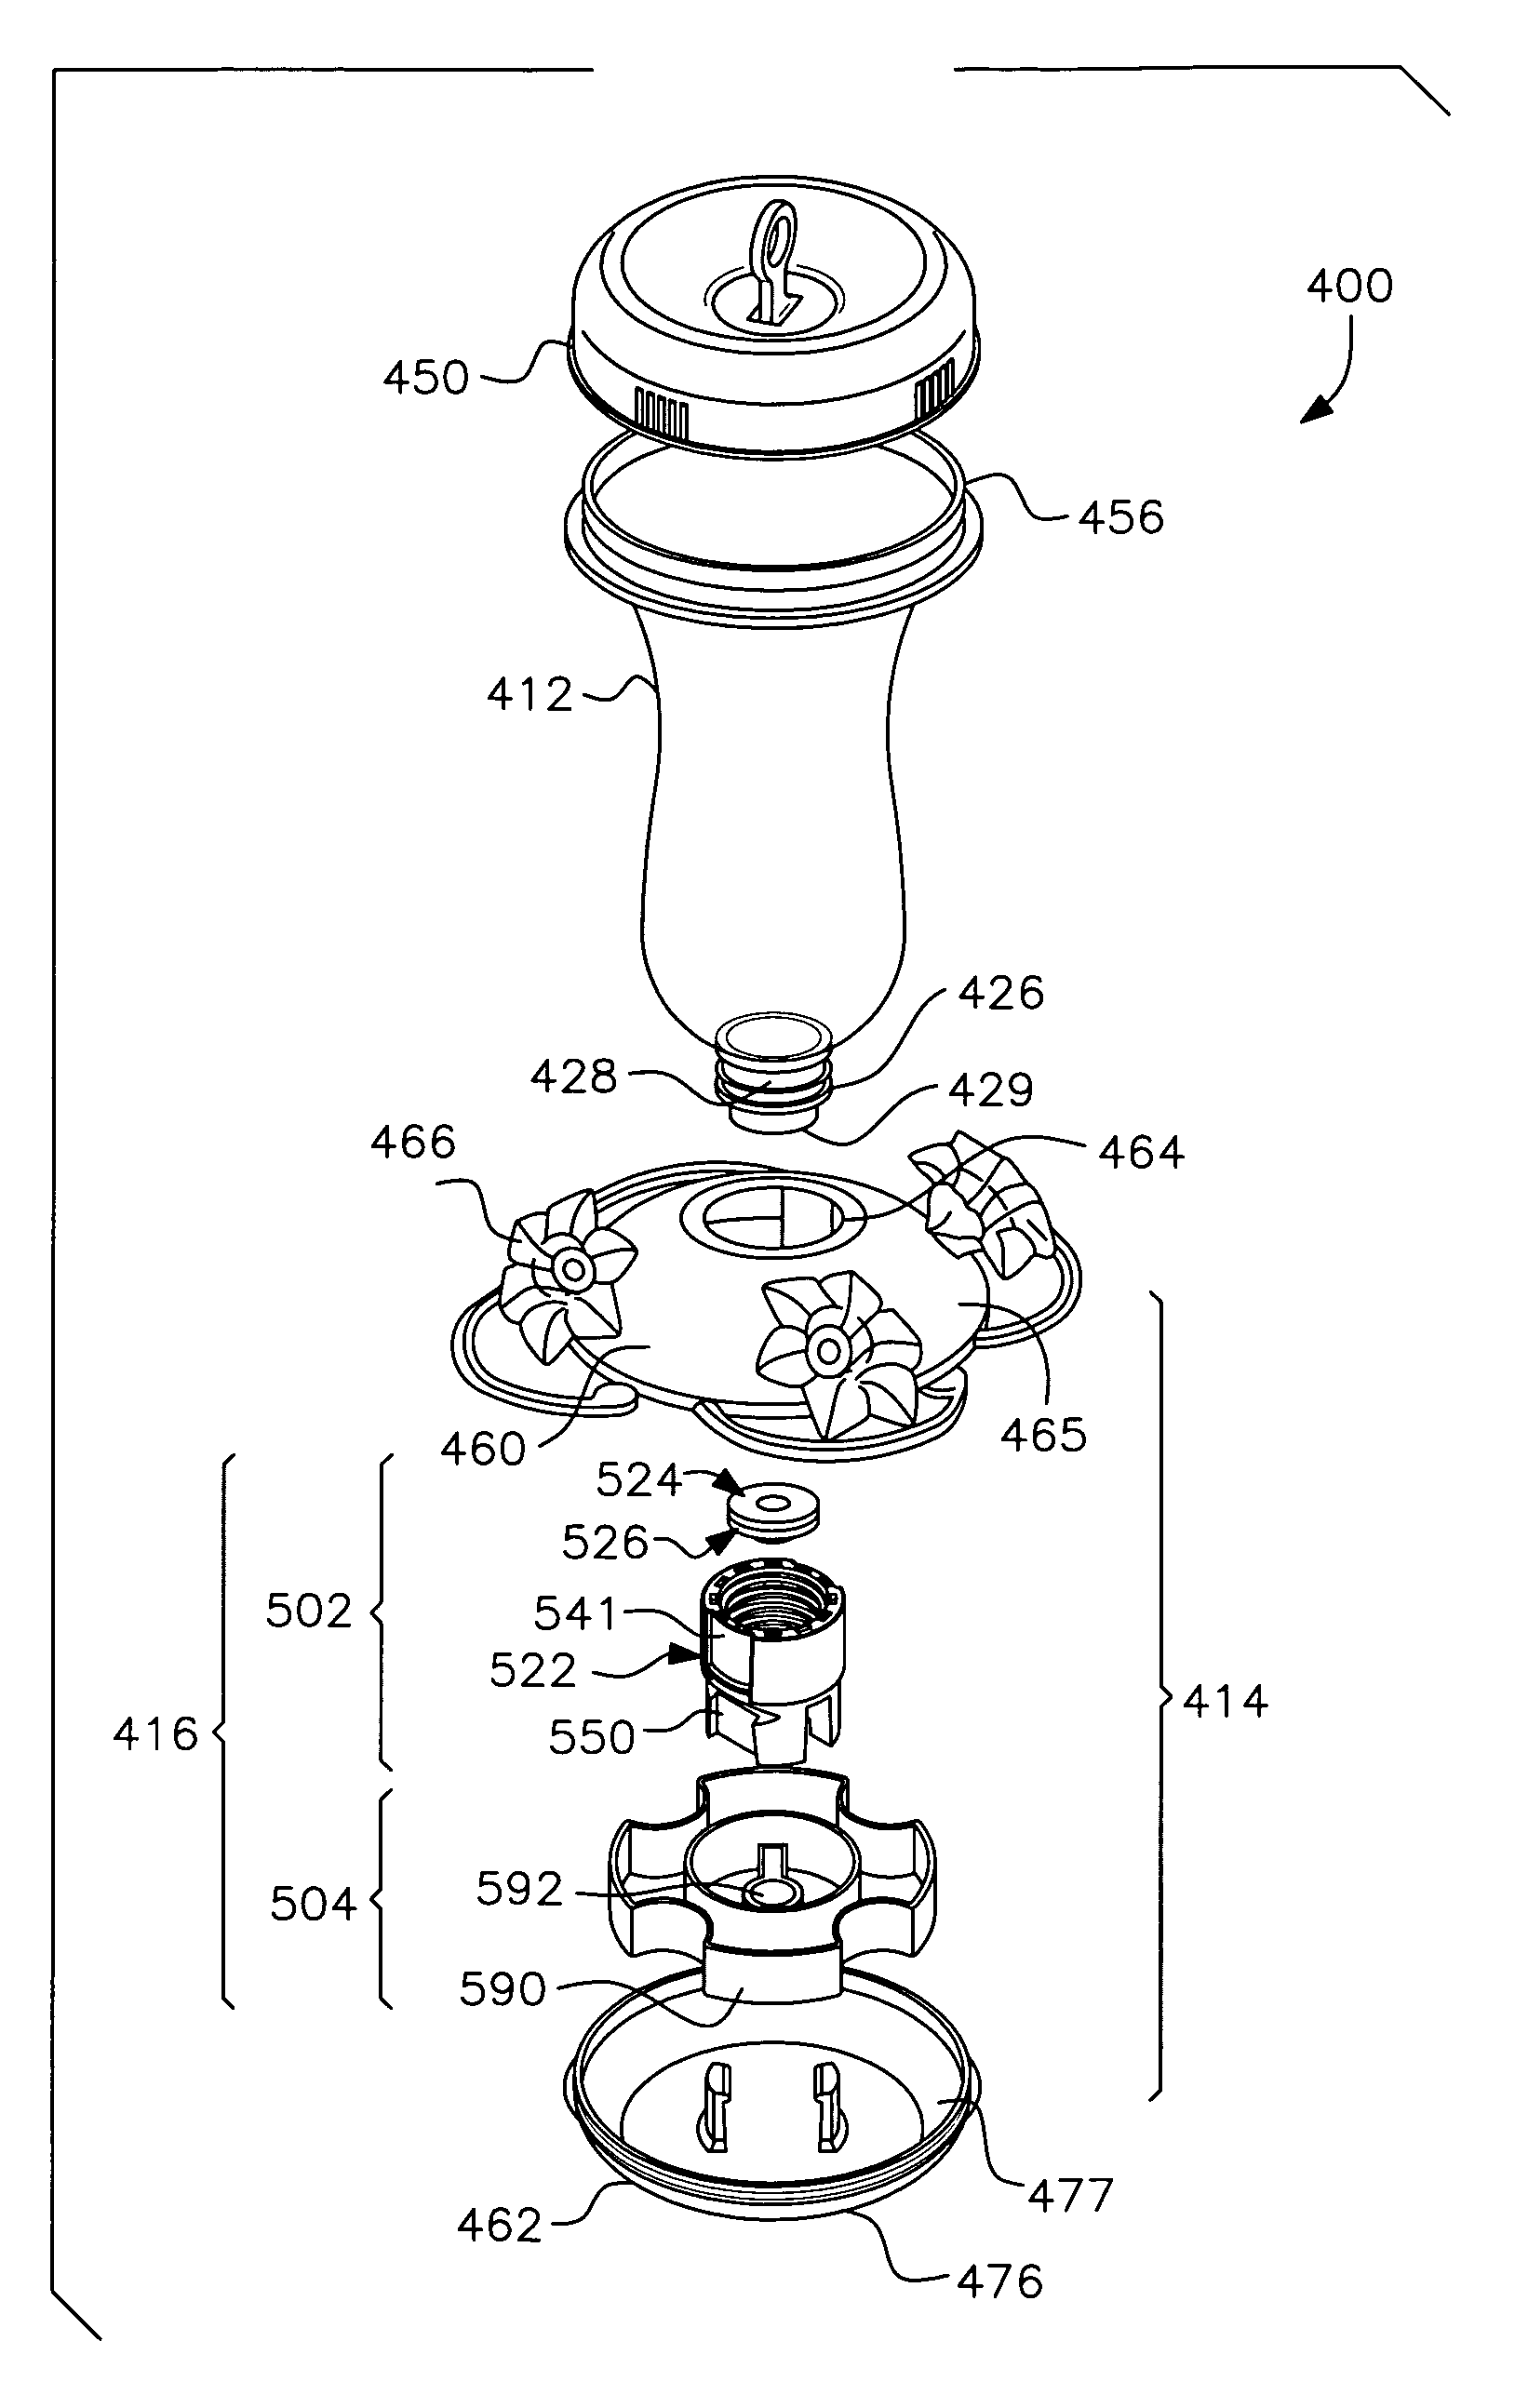 Top-fill hummingbird feeder with float valve base closure mechanism